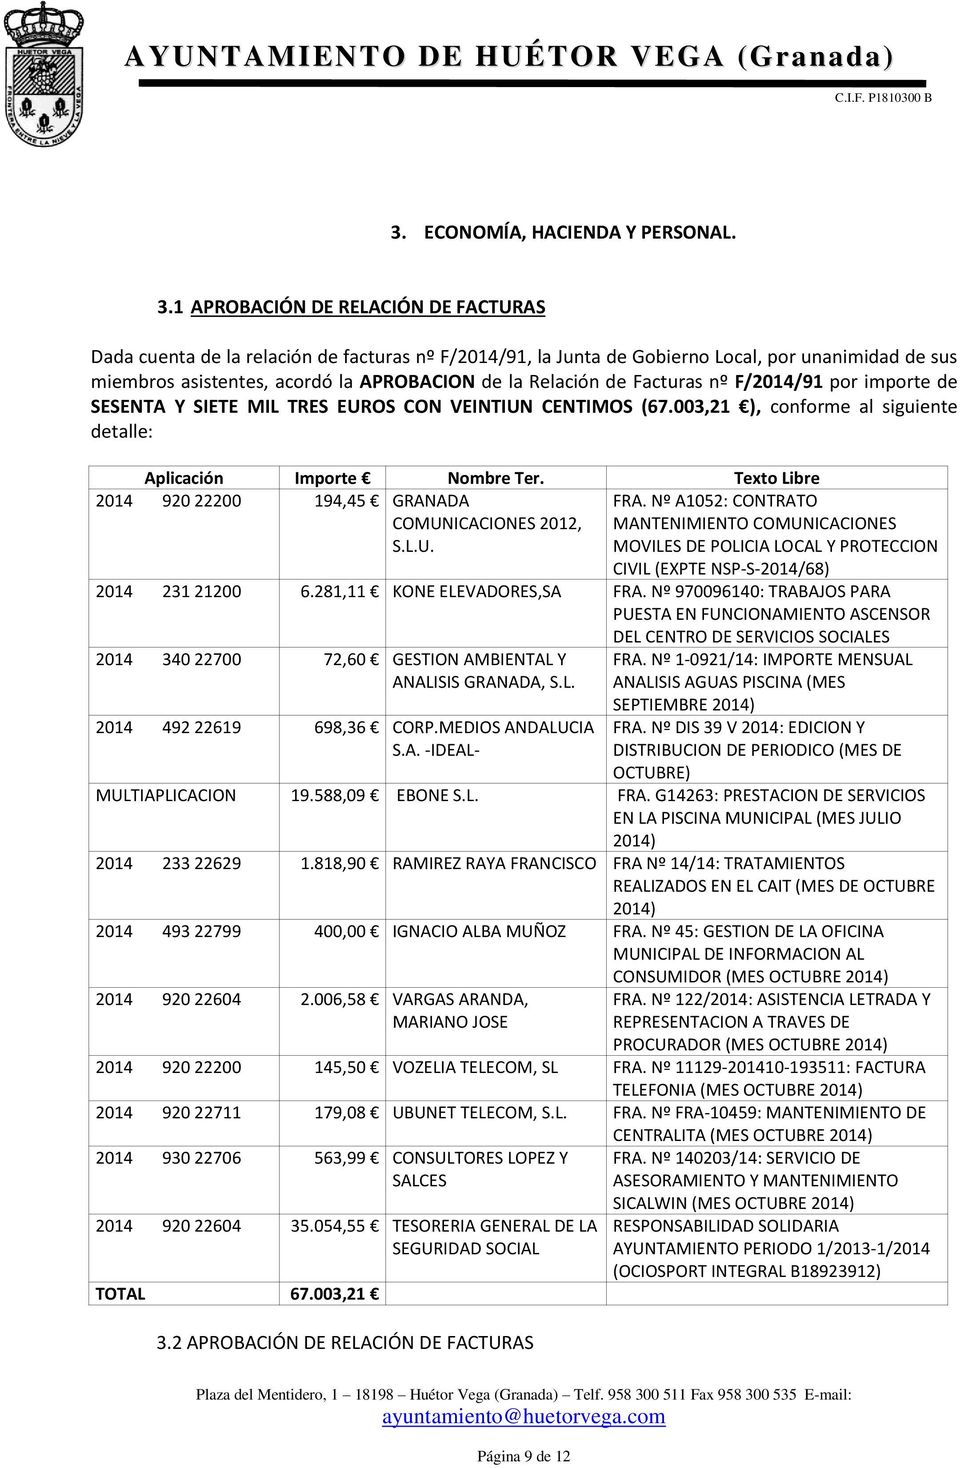 Facturas nº F/2014/91 por importe de SESENTA Y SIETE MIL TRES EUROS CON VEINTIUN CENTIMOS (67.003,21 ), conforme al siguiente detalle: Aplicación Importe Nombre Ter.